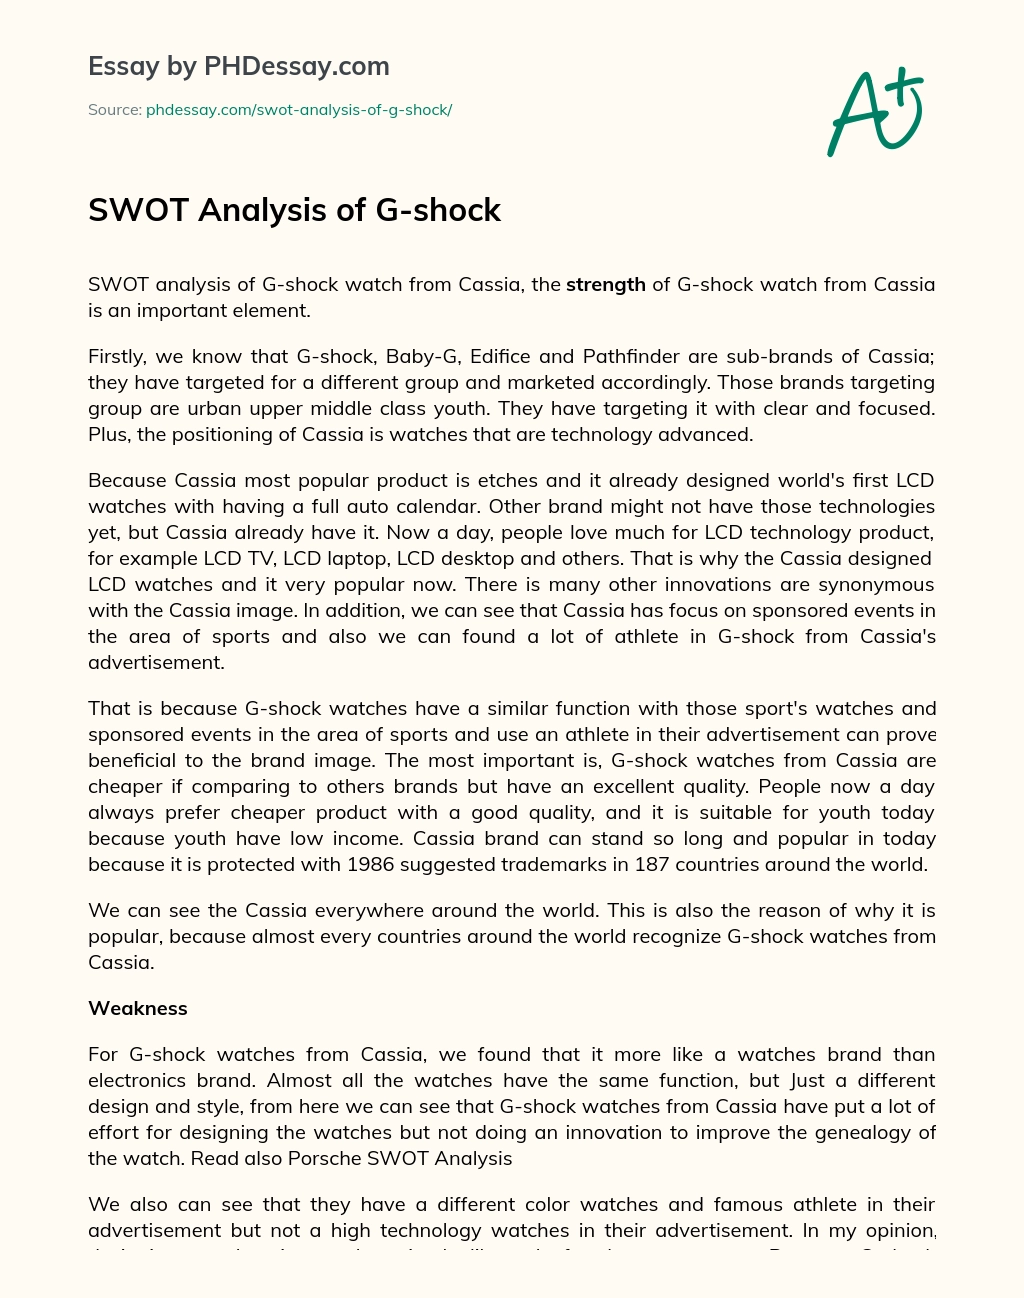 SWOT Analysis of G-shock essay